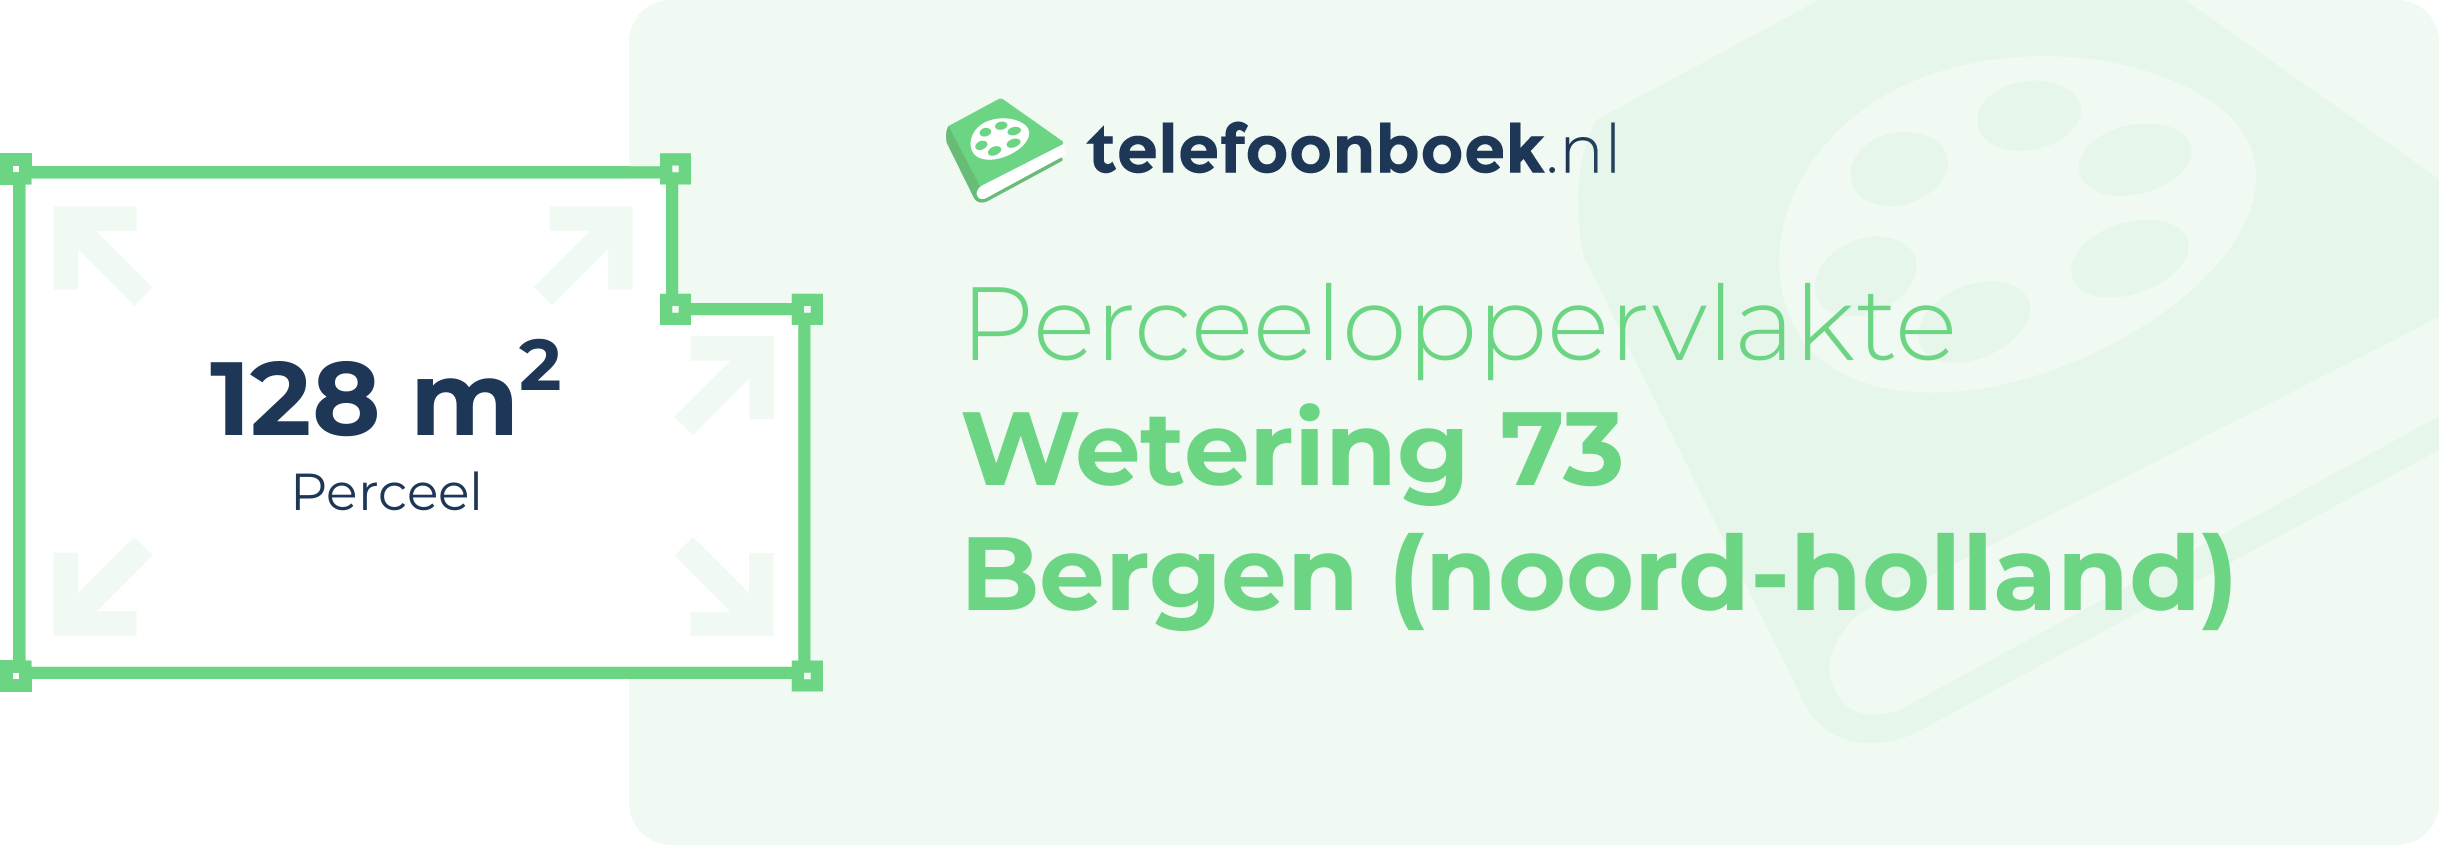 Perceeloppervlakte Wetering 73 Bergen (Noord-Holland)